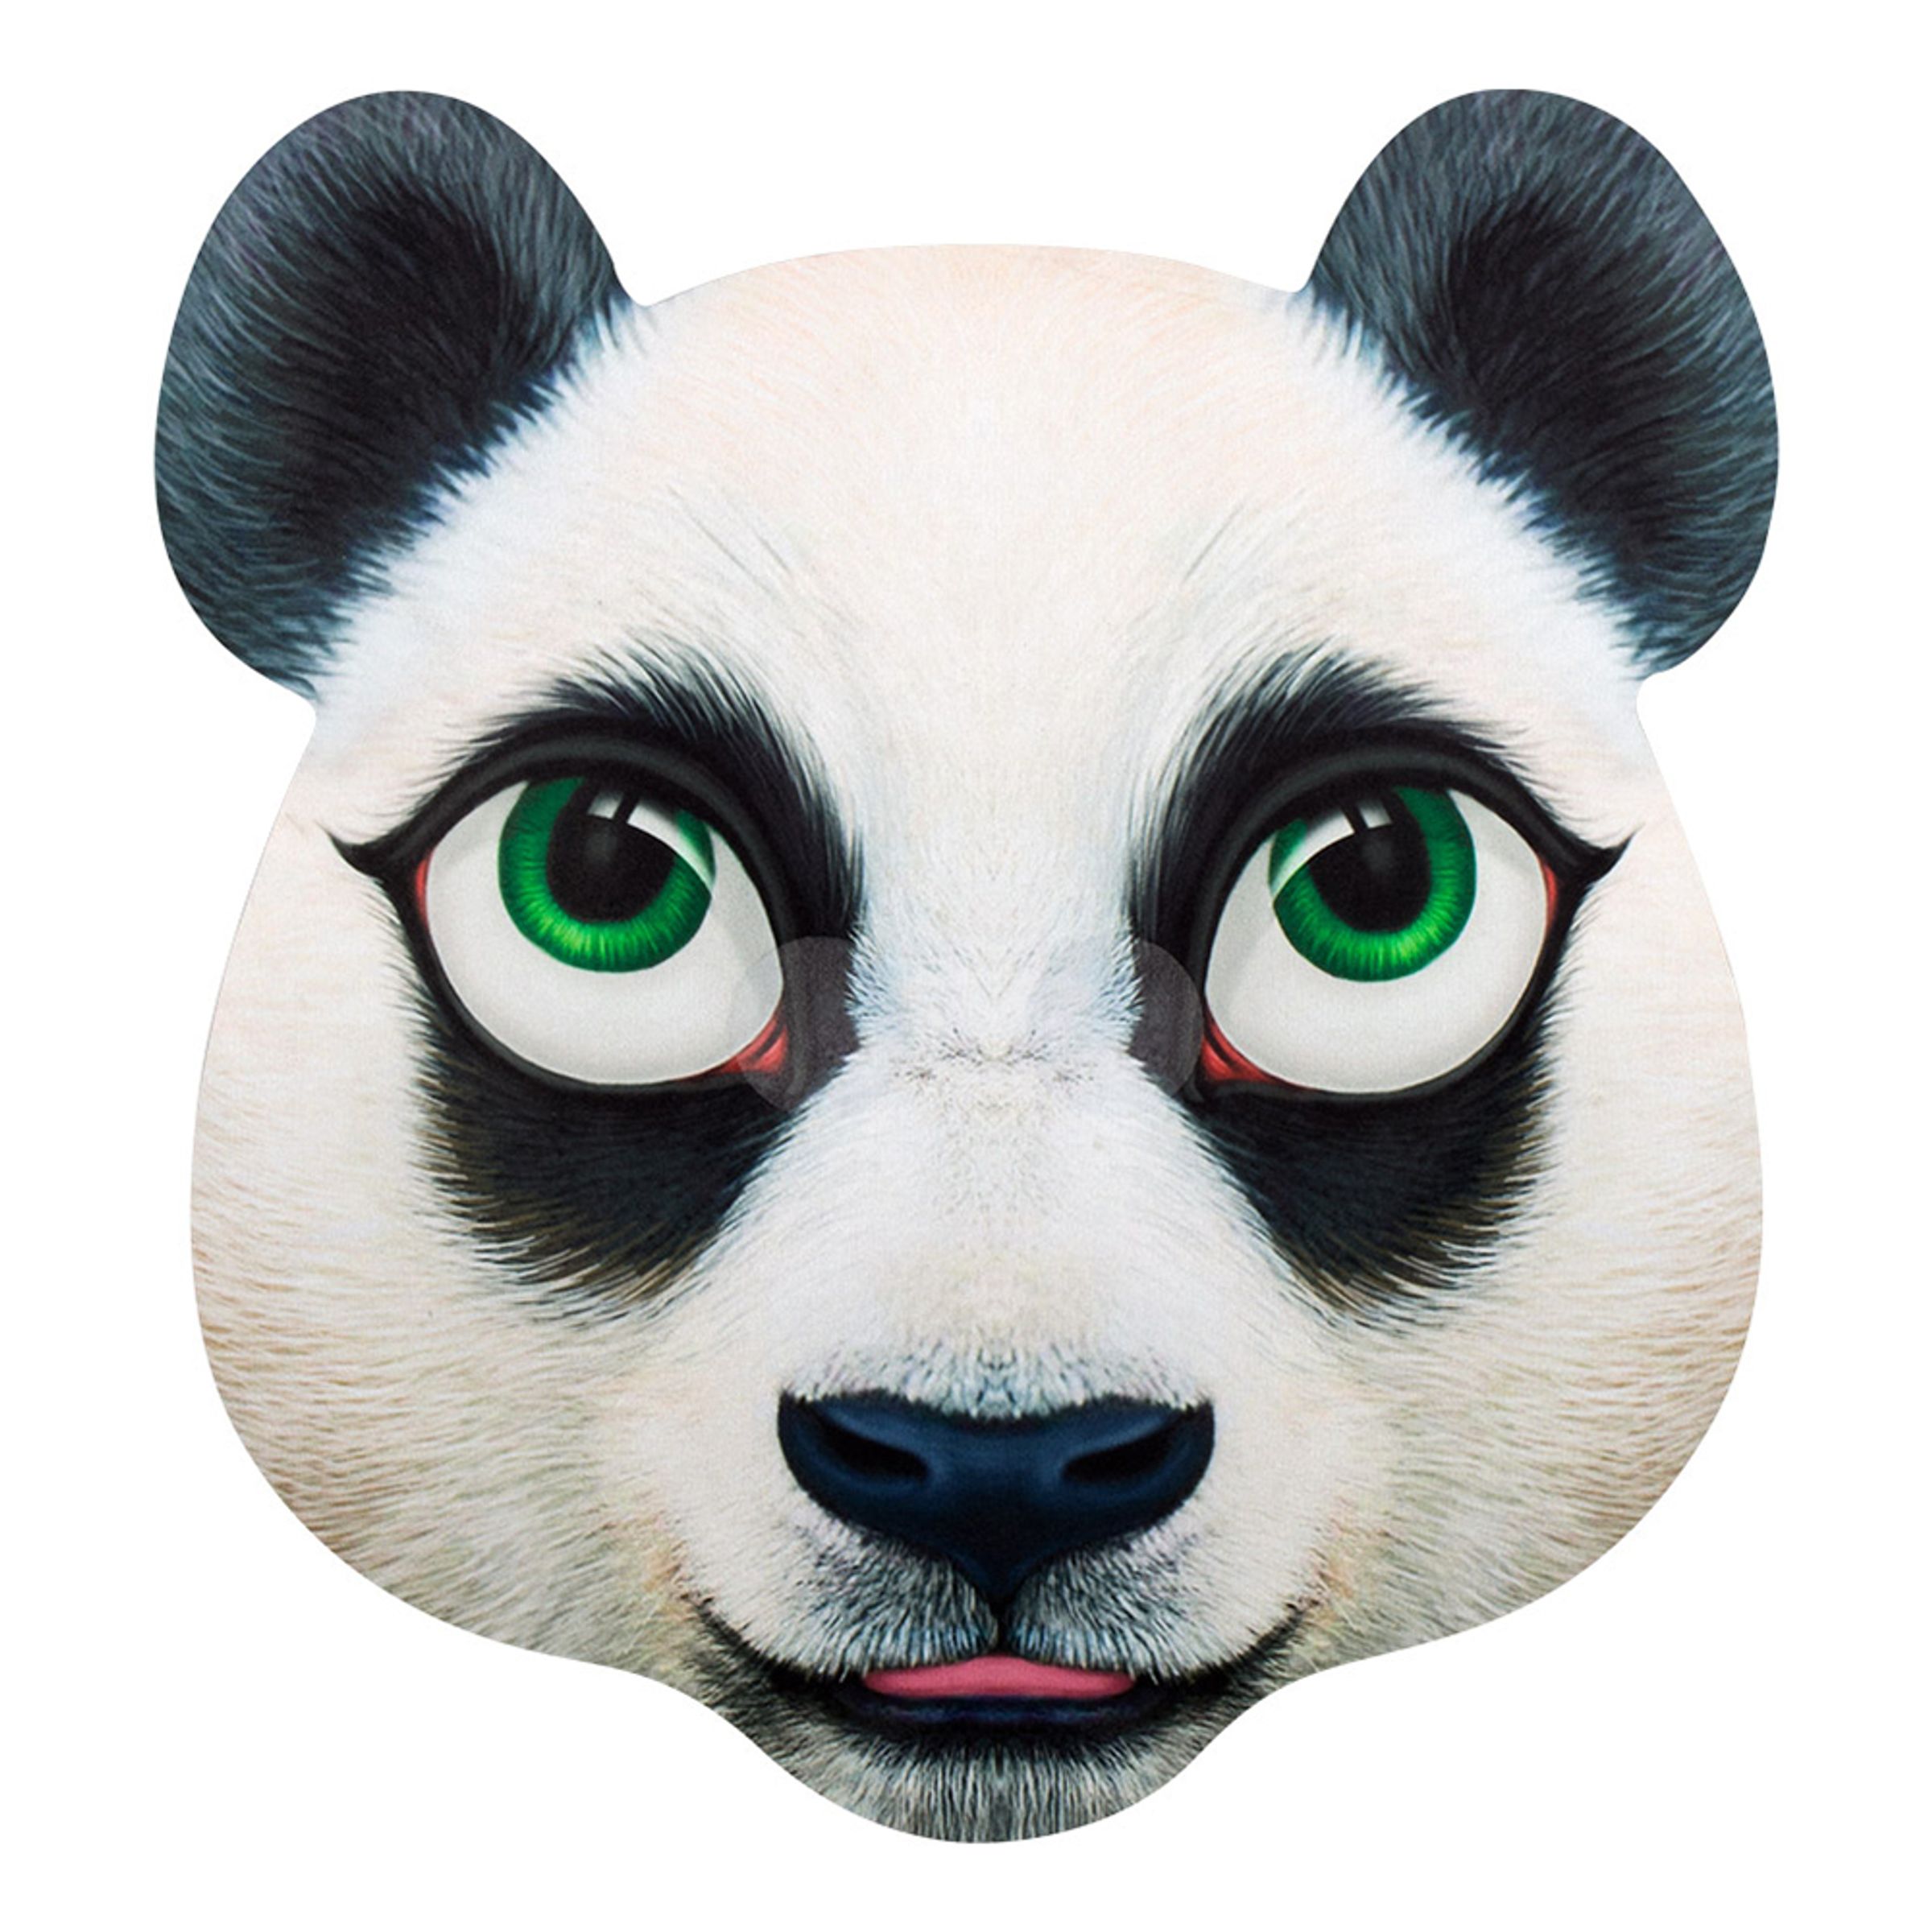 Jumbomask Panda - One size